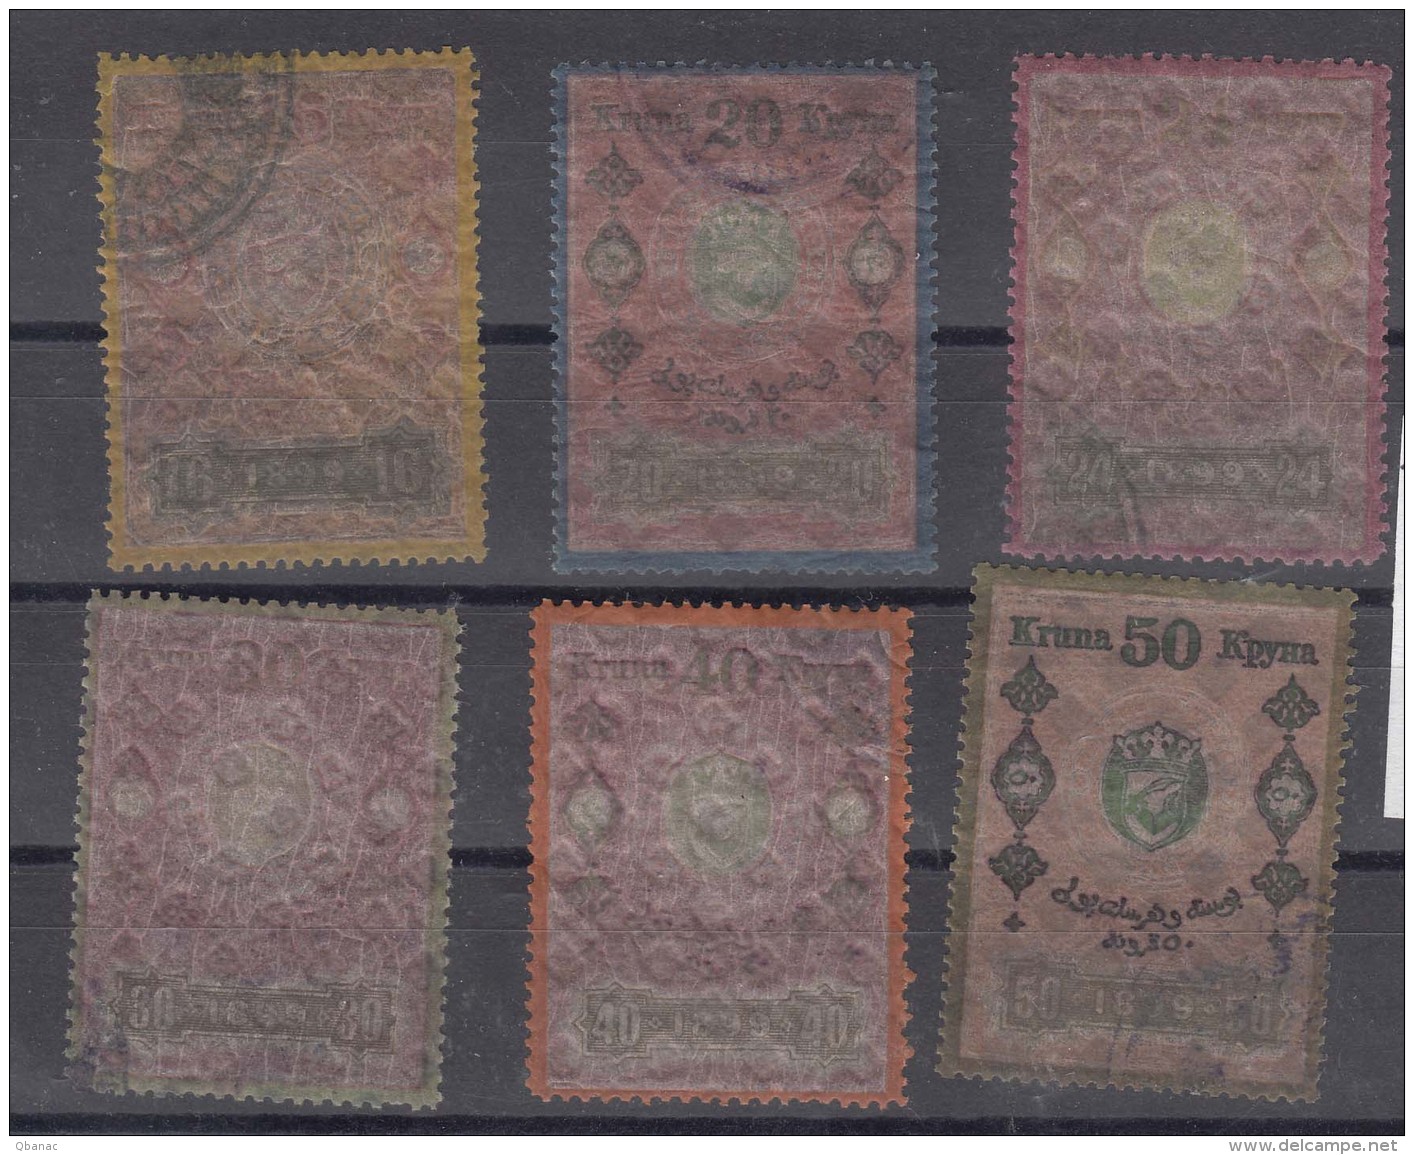 Austria Occupation Of Bosnia Rare Revenue Fiscal Tax Stamps Pieces - Revenue Stamps